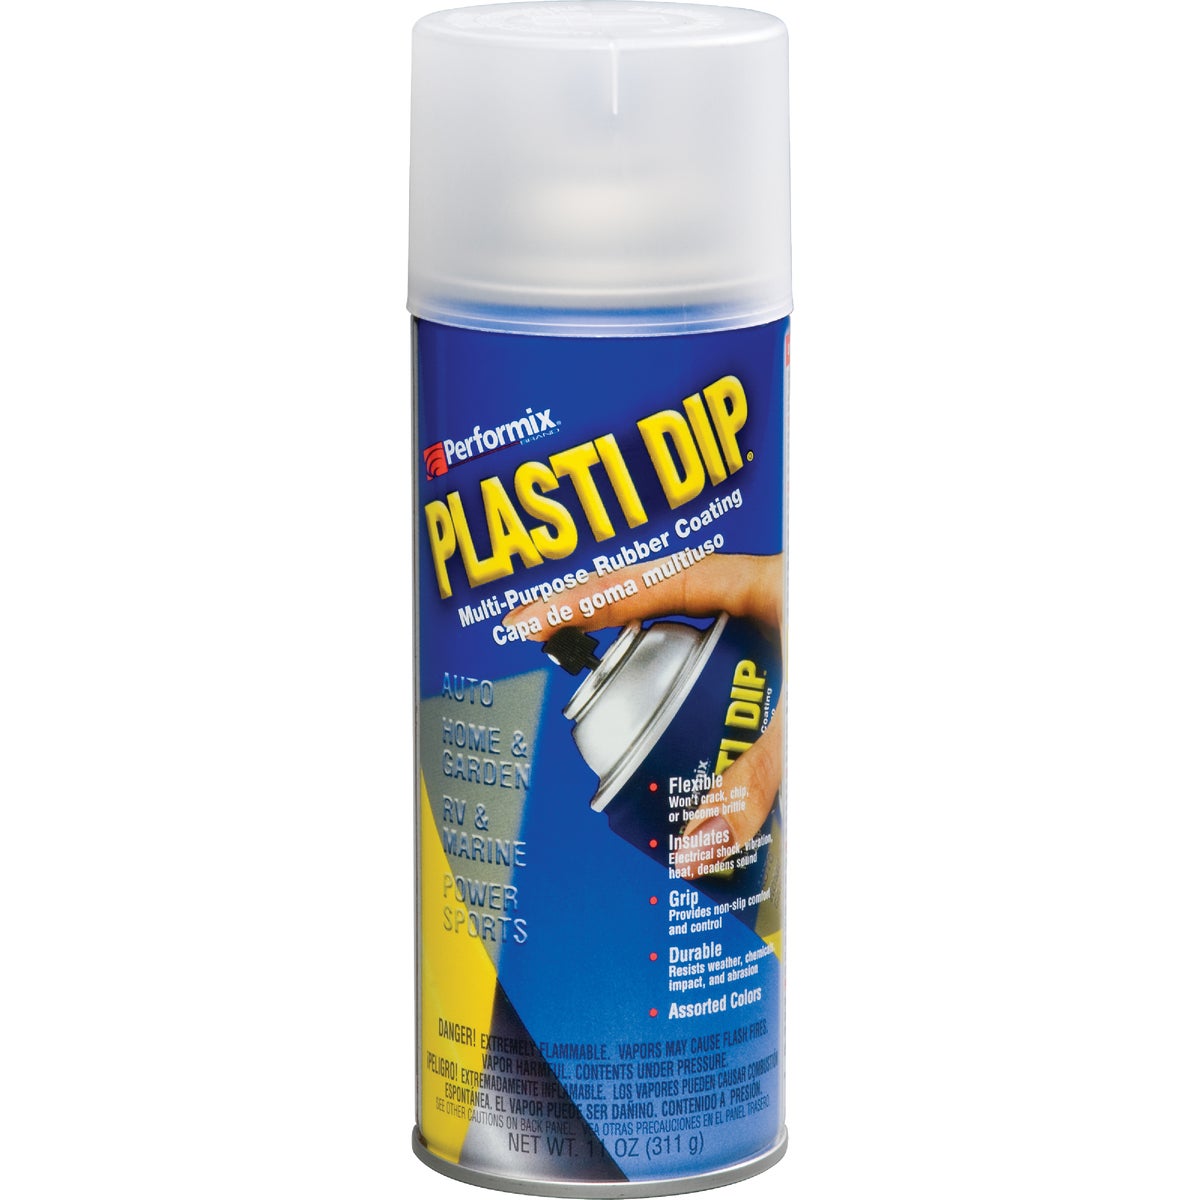 Performix Plasti Dip Clear 11 Oz. Aerosol Rubber Coating Rubber Coating Spray Paint